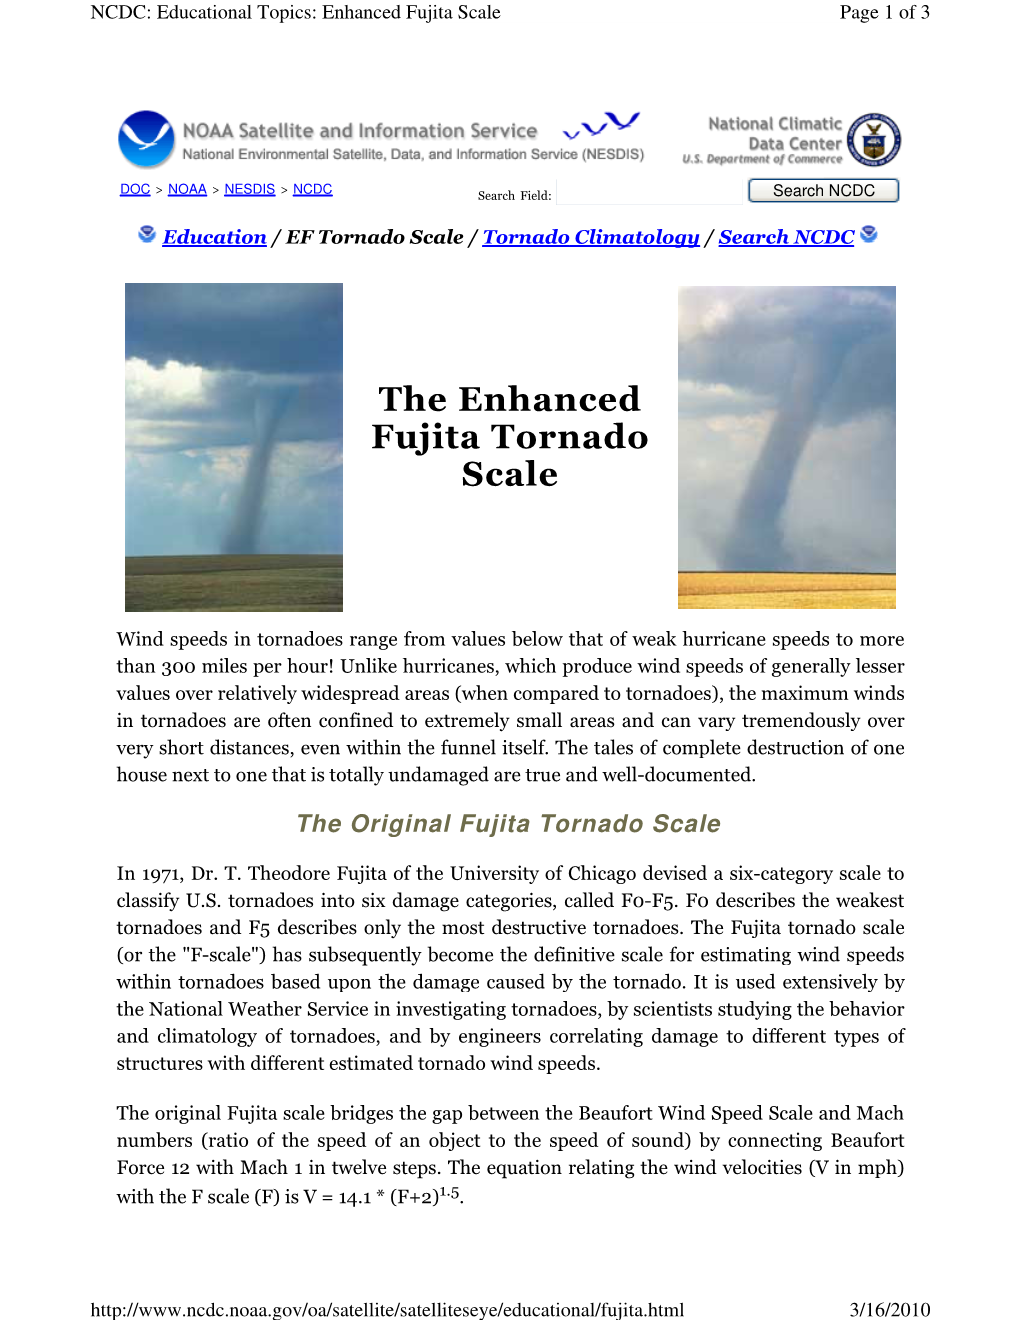 The Enhanced Fujita Tornado Scale